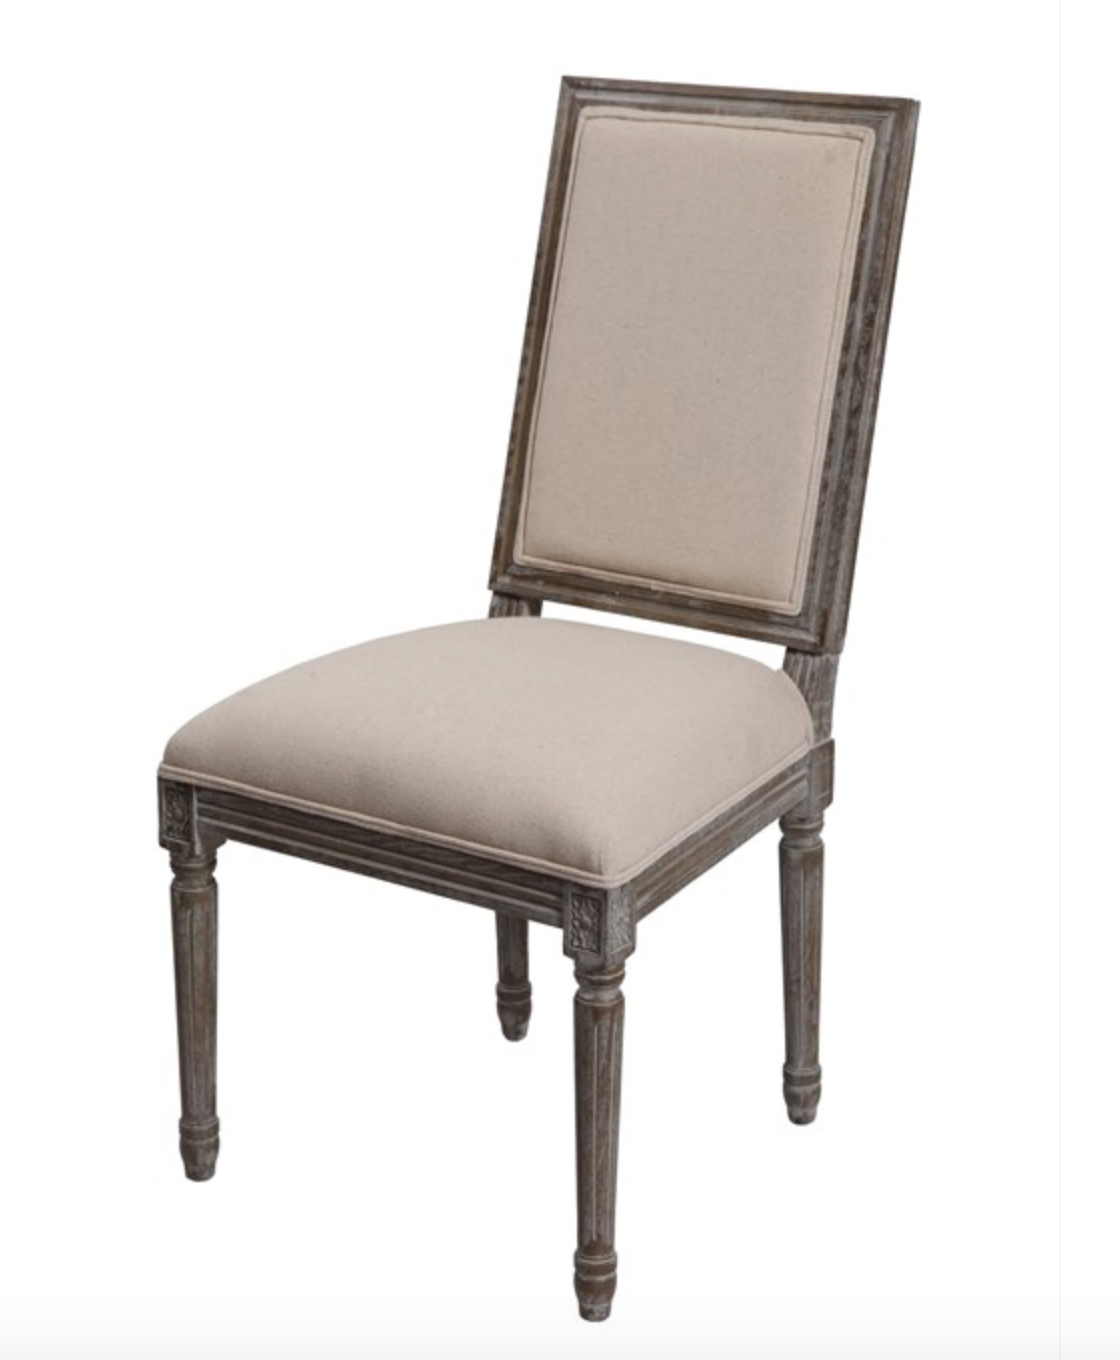 Hartwell Square Side Chair - Oatmeal Linen - Classic Carolina Home